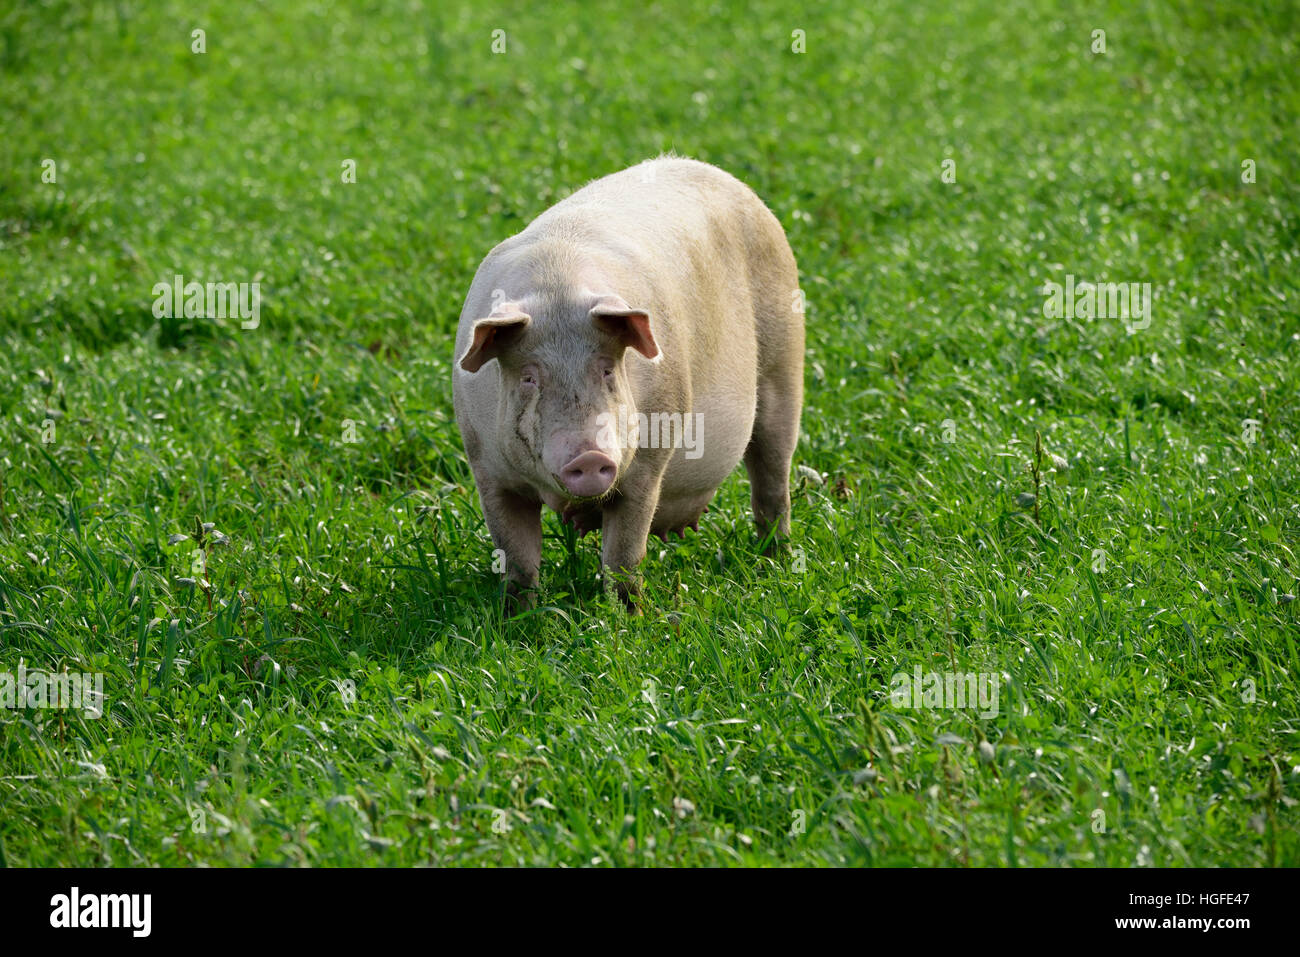 Pig, domestic animal, Stock Photo